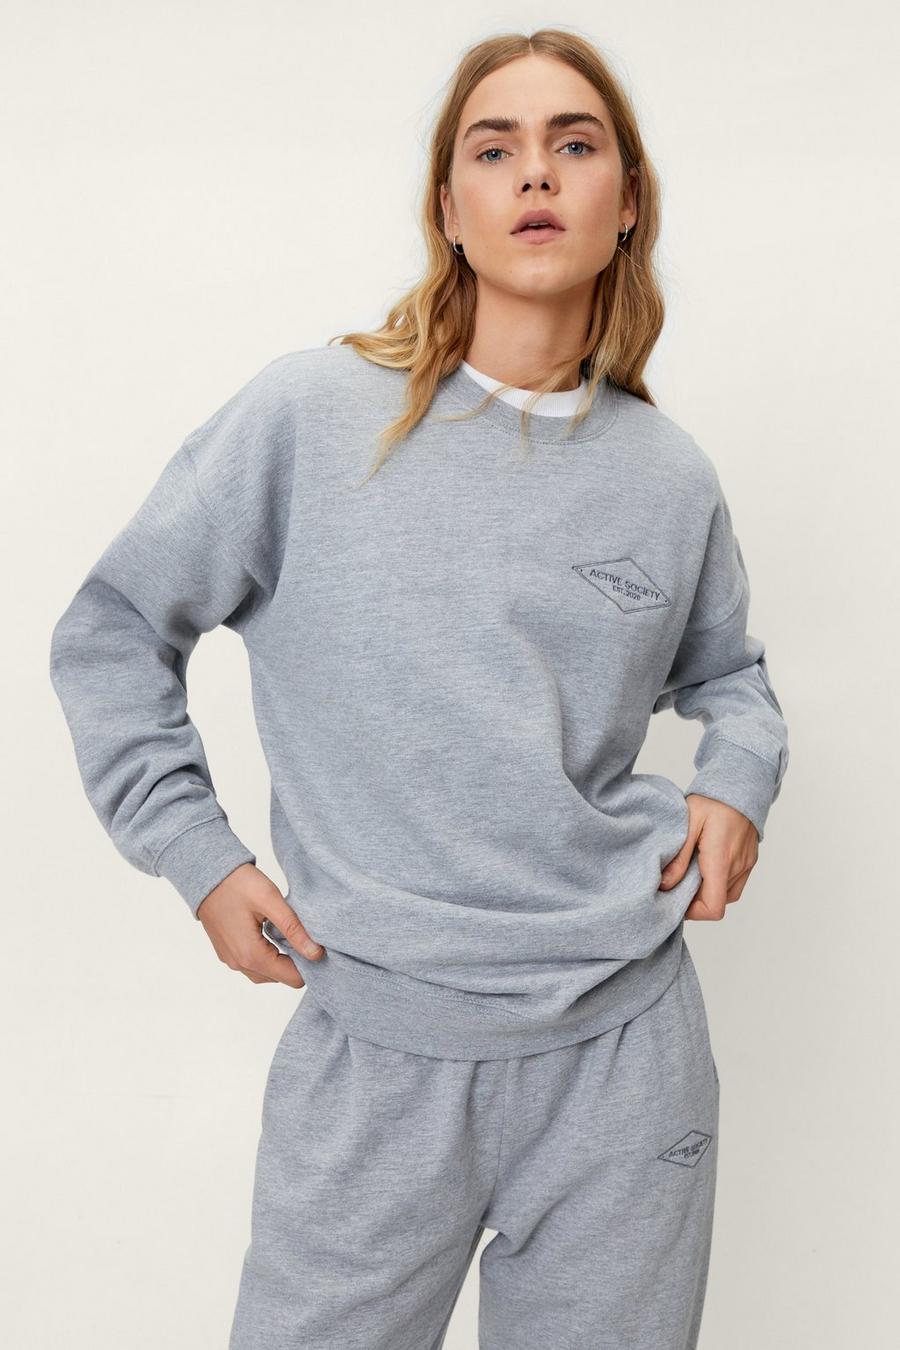 Active Society Embroidered Sweatshirt and Sweatpants Set